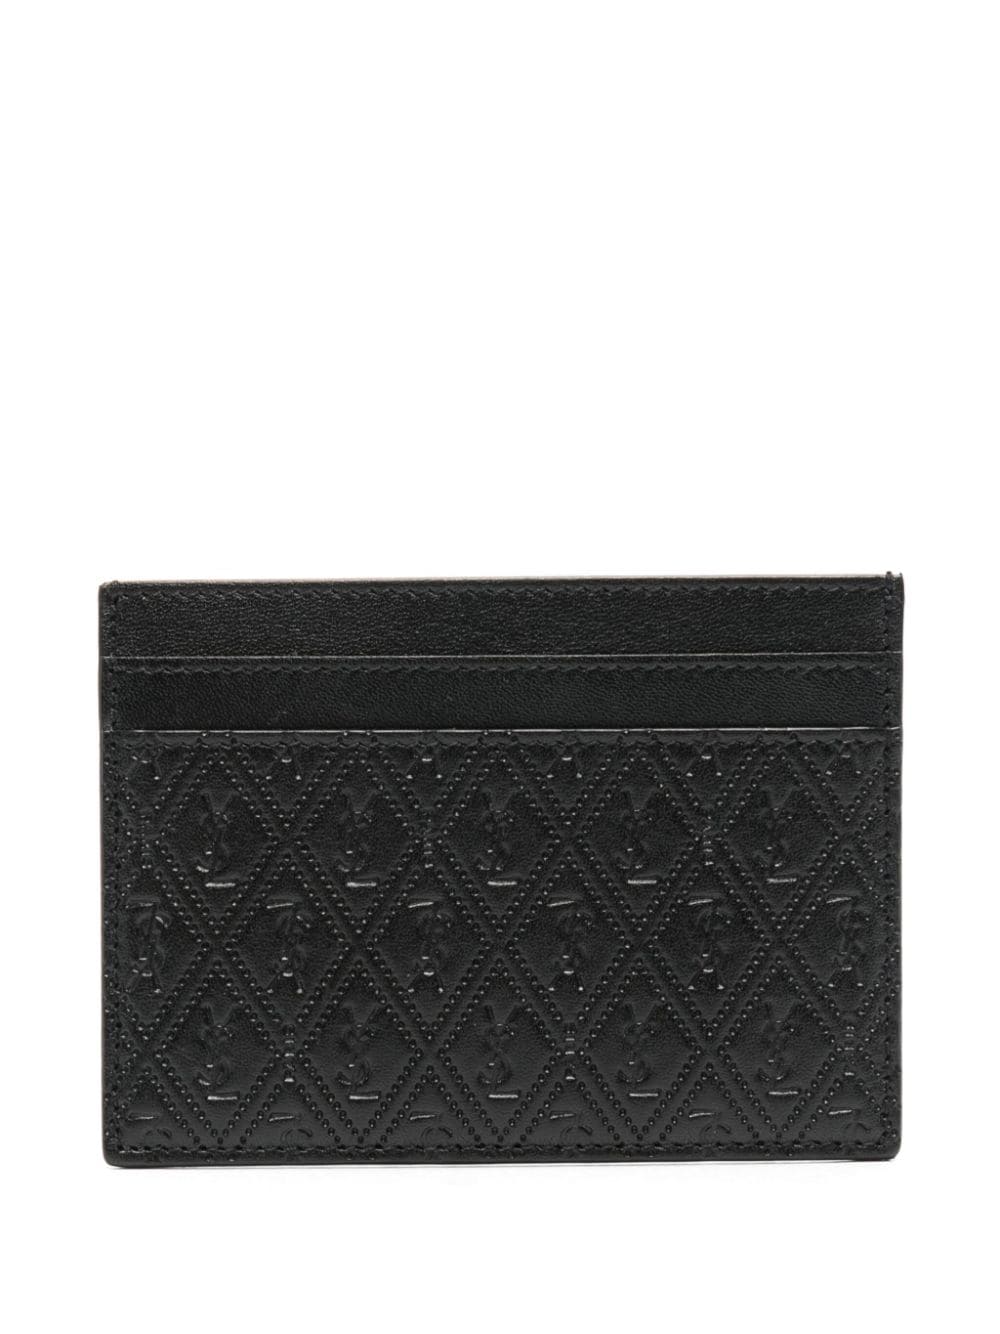 Saint Laurent perforated leather cardholder - Black von Saint Laurent